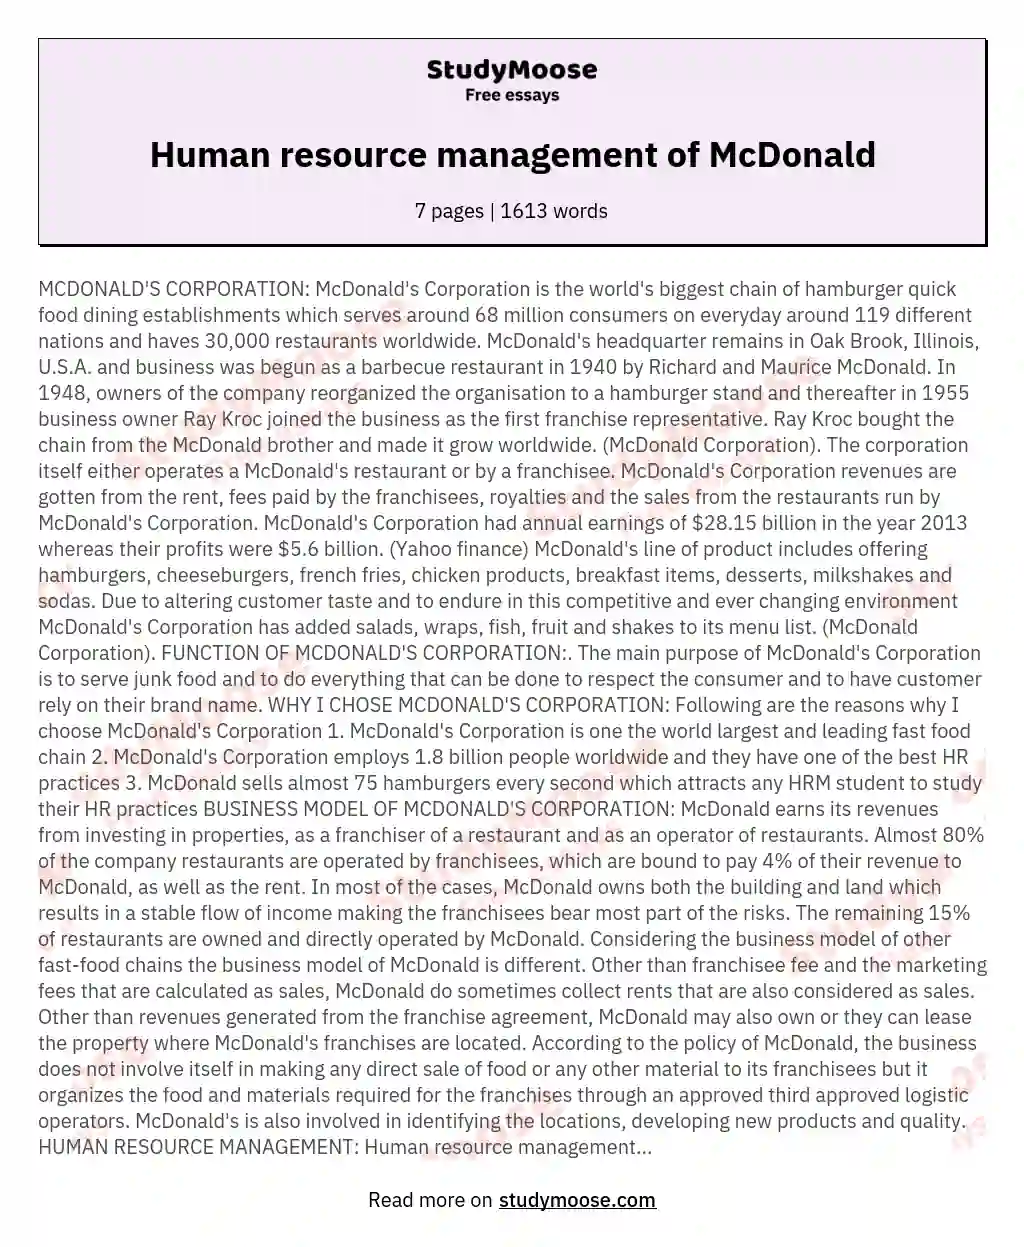 mcdonalds case study human resource management